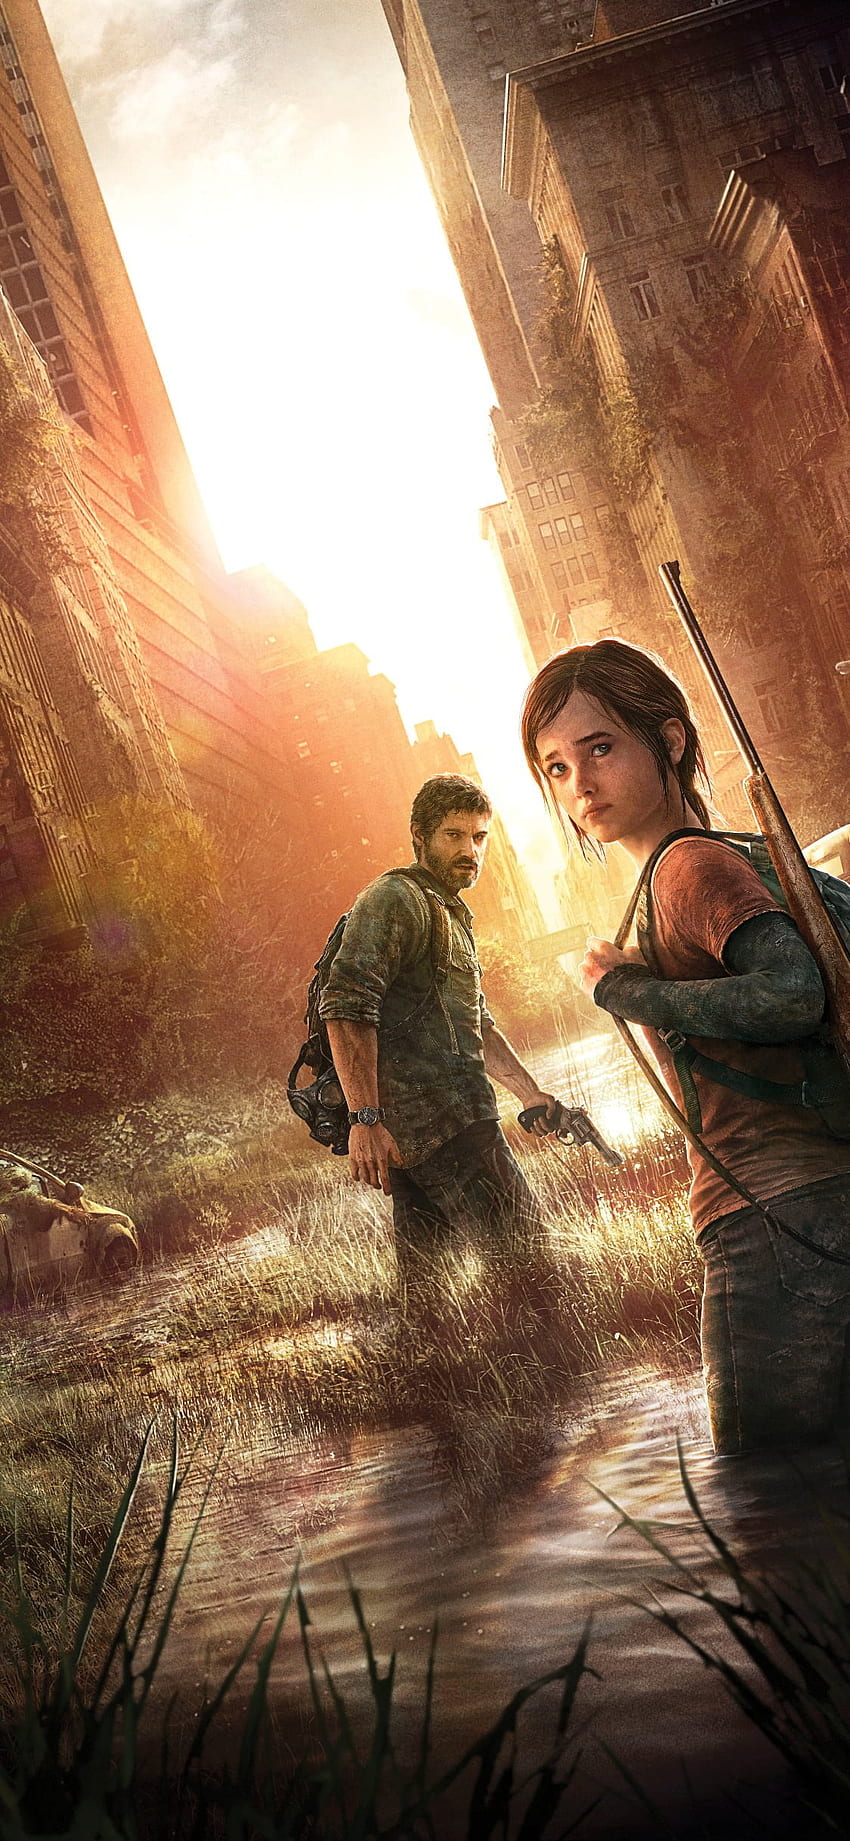 Joel, Ellie, The Last of Us - Update, Bestes iPhone und iPhone-Hintergrund : Update, Bestes iPhone und iPhone-Hintergrund, Ellie The Last of Us HD-Handy-Hintergrundbild